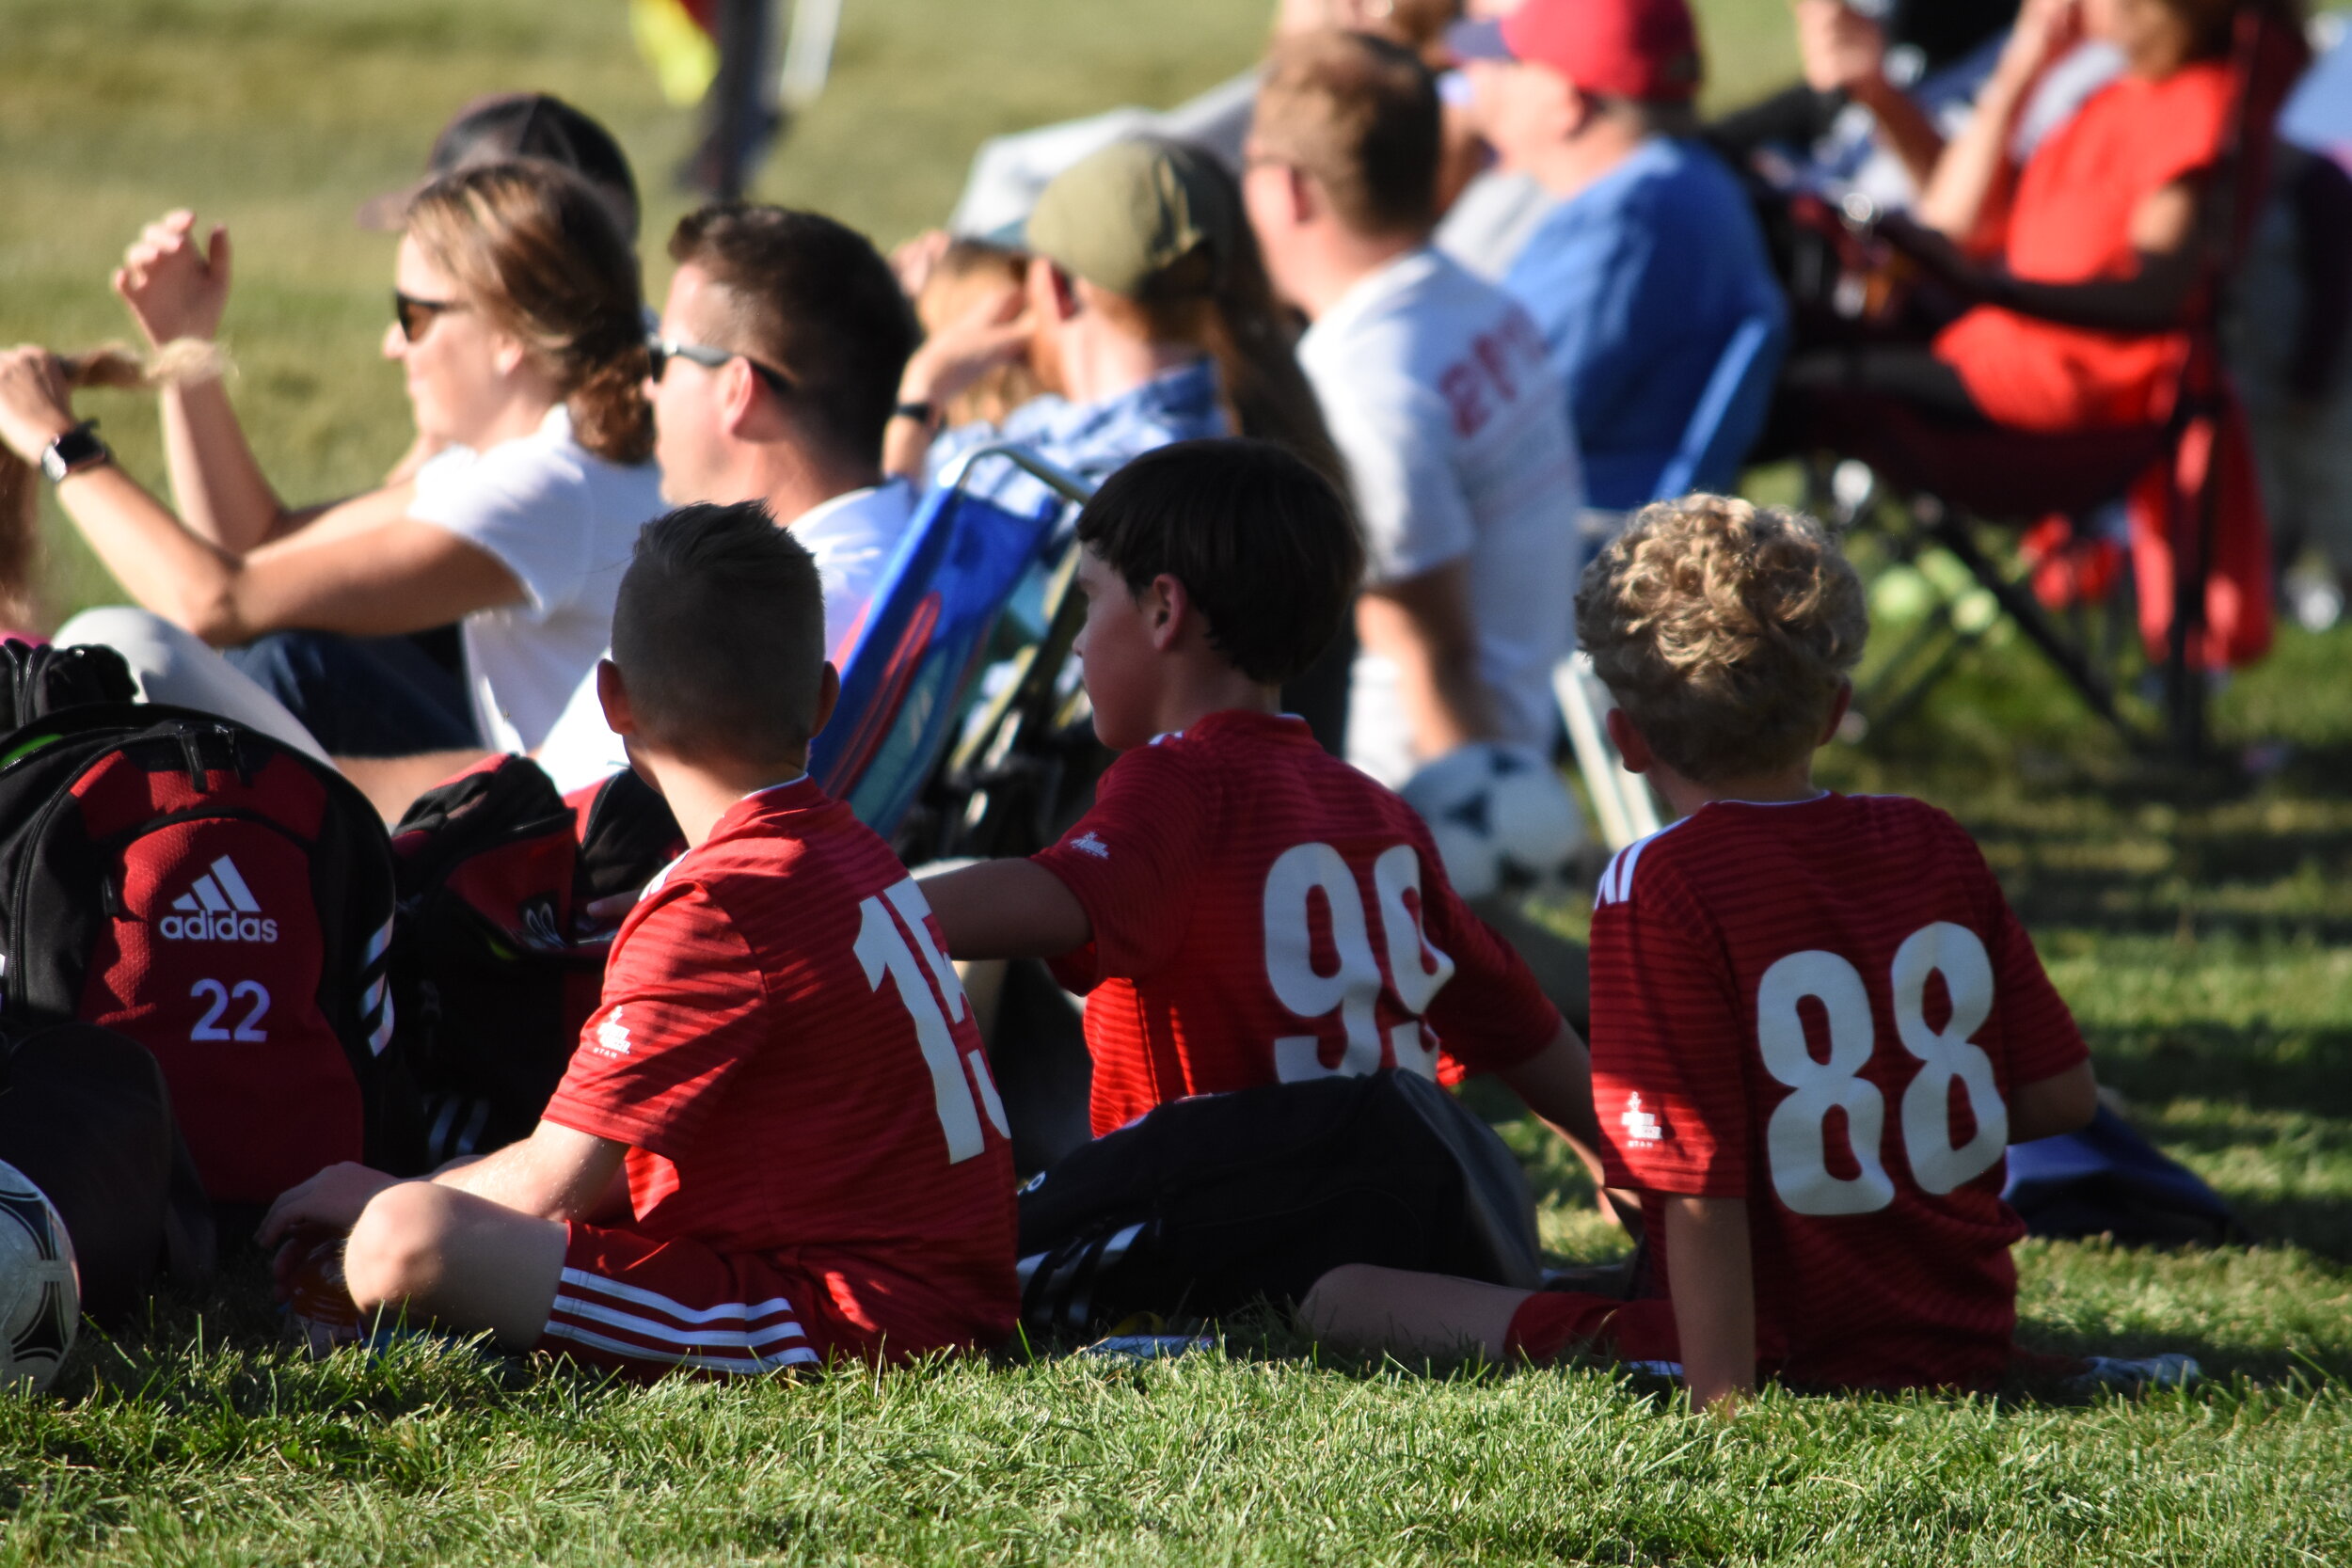 Youth Rec Soccer League Payment - Arizona Sports League